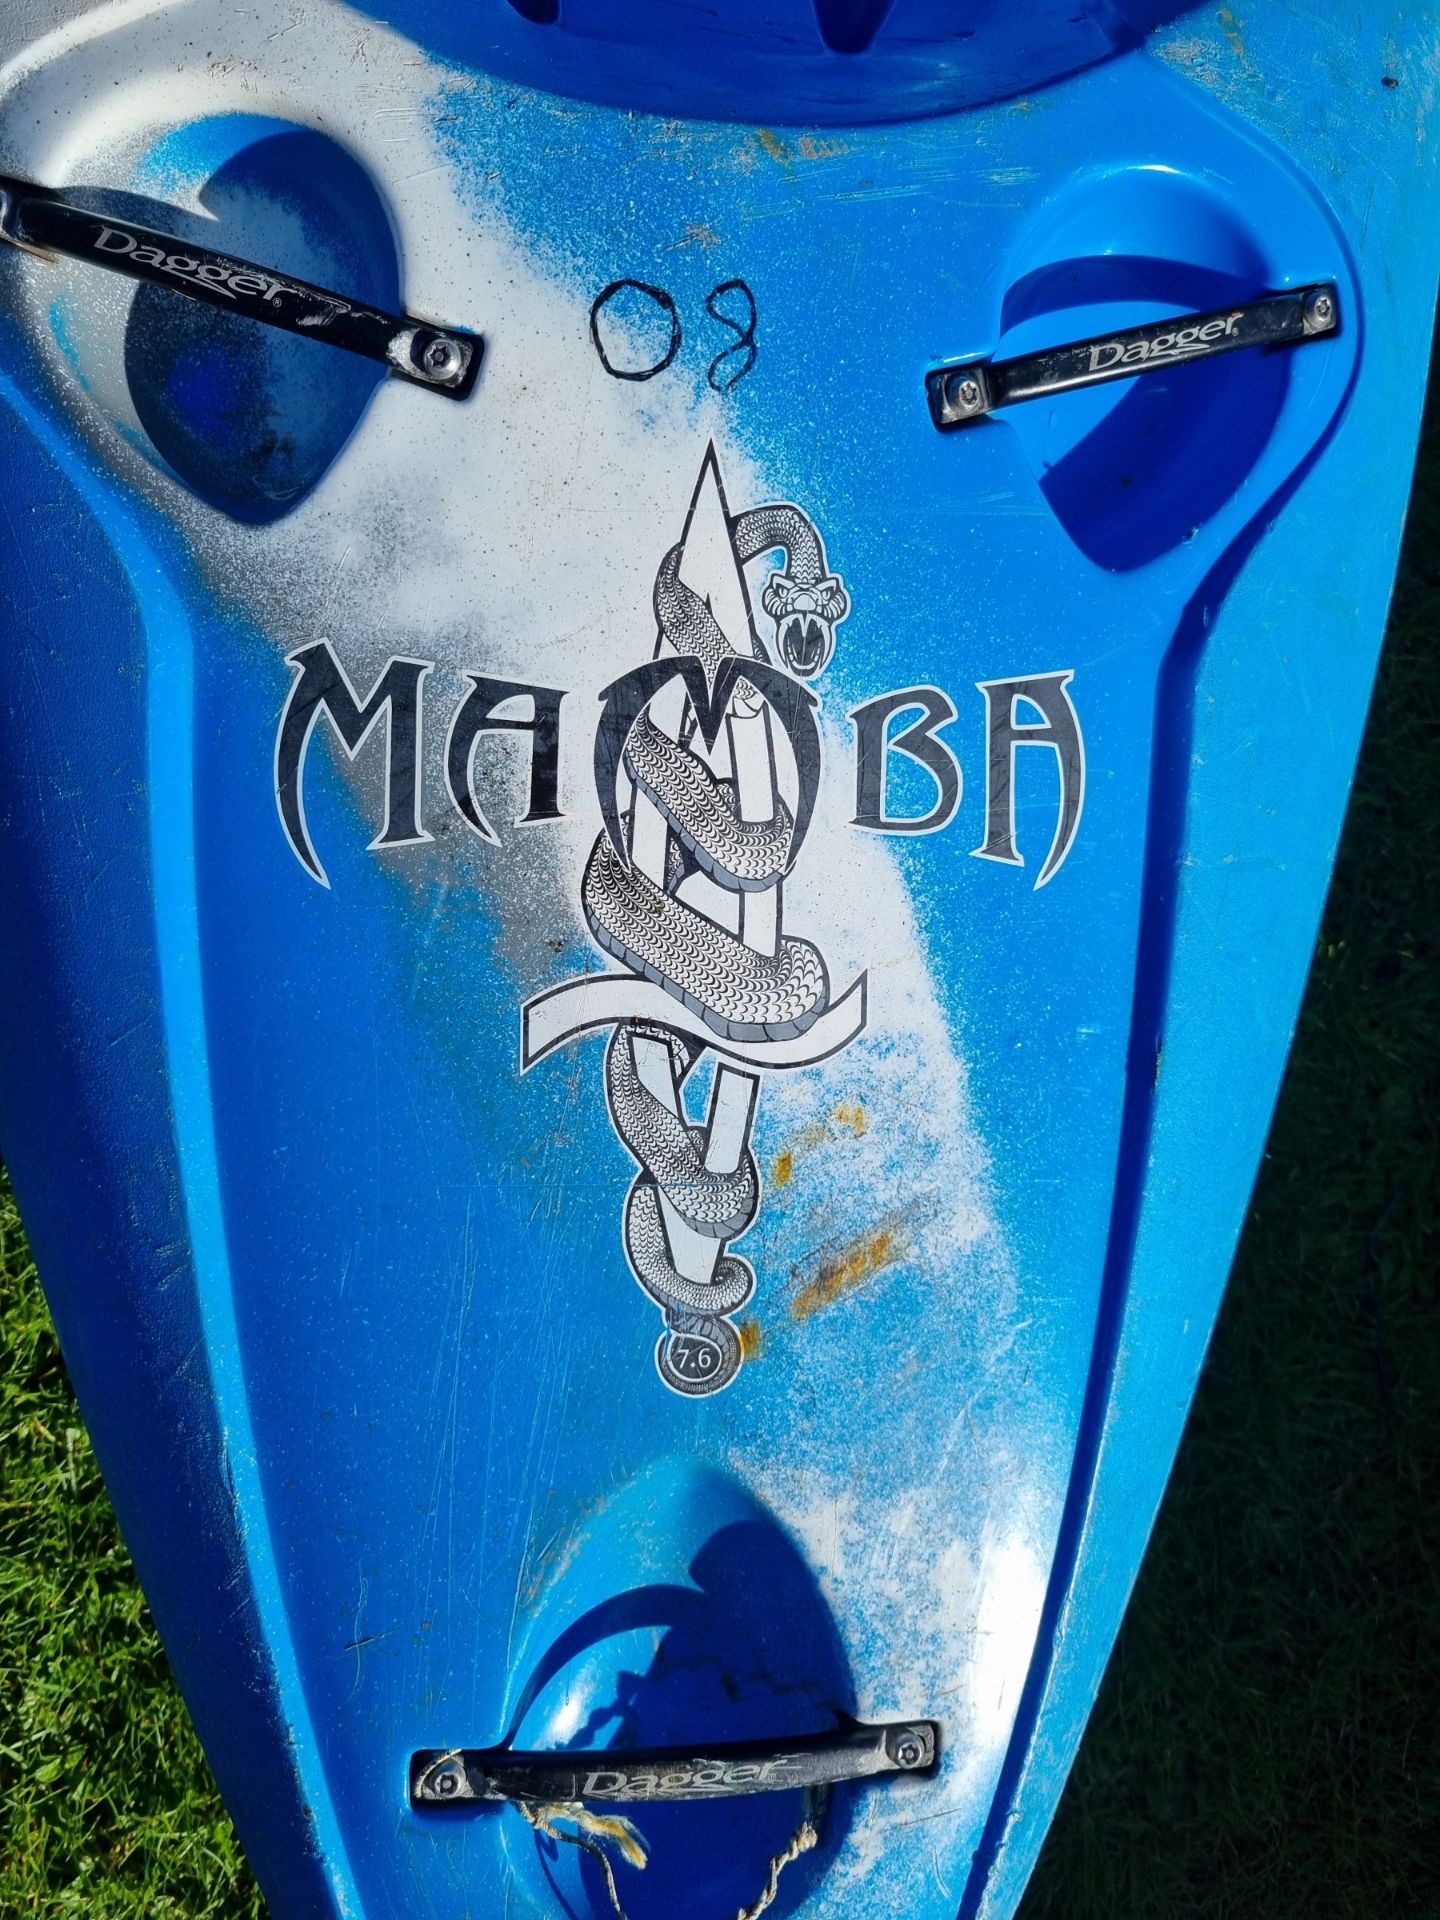 Dagger Mamba kayak/canoe - L260 x W70 x H40cm - Blue white - Image 4 of 6